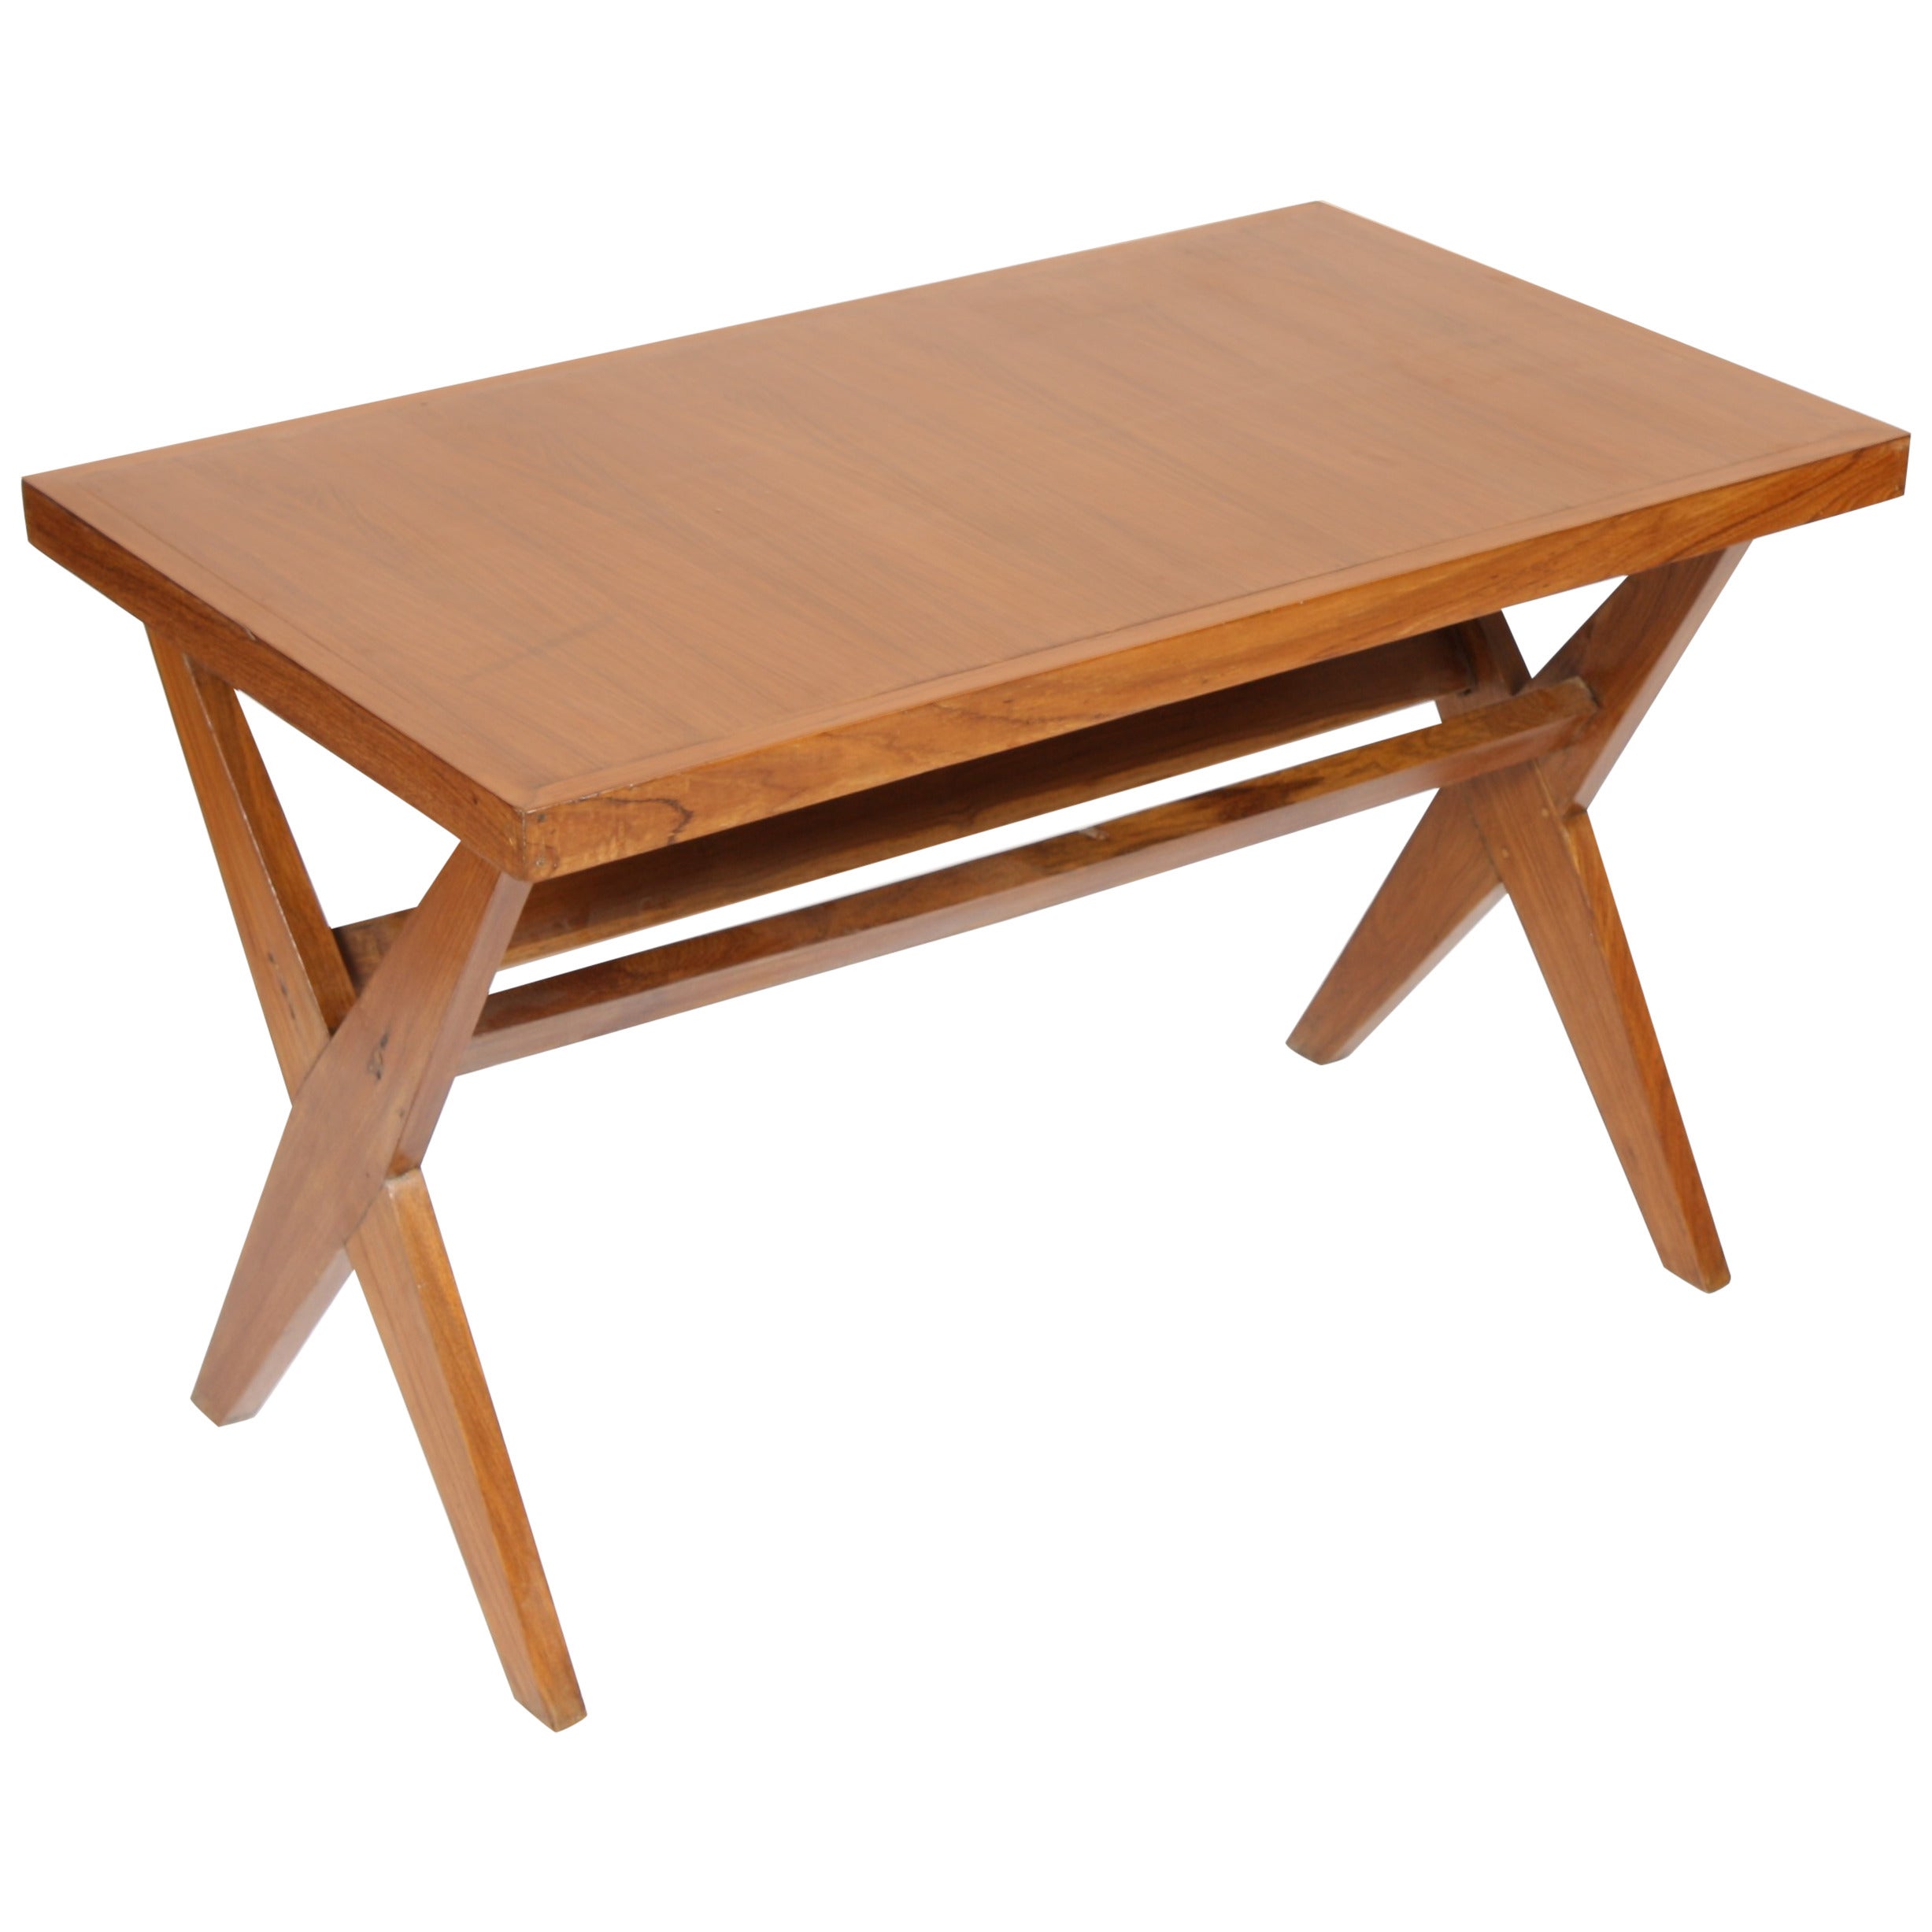 Table by Pierre Jeanneret